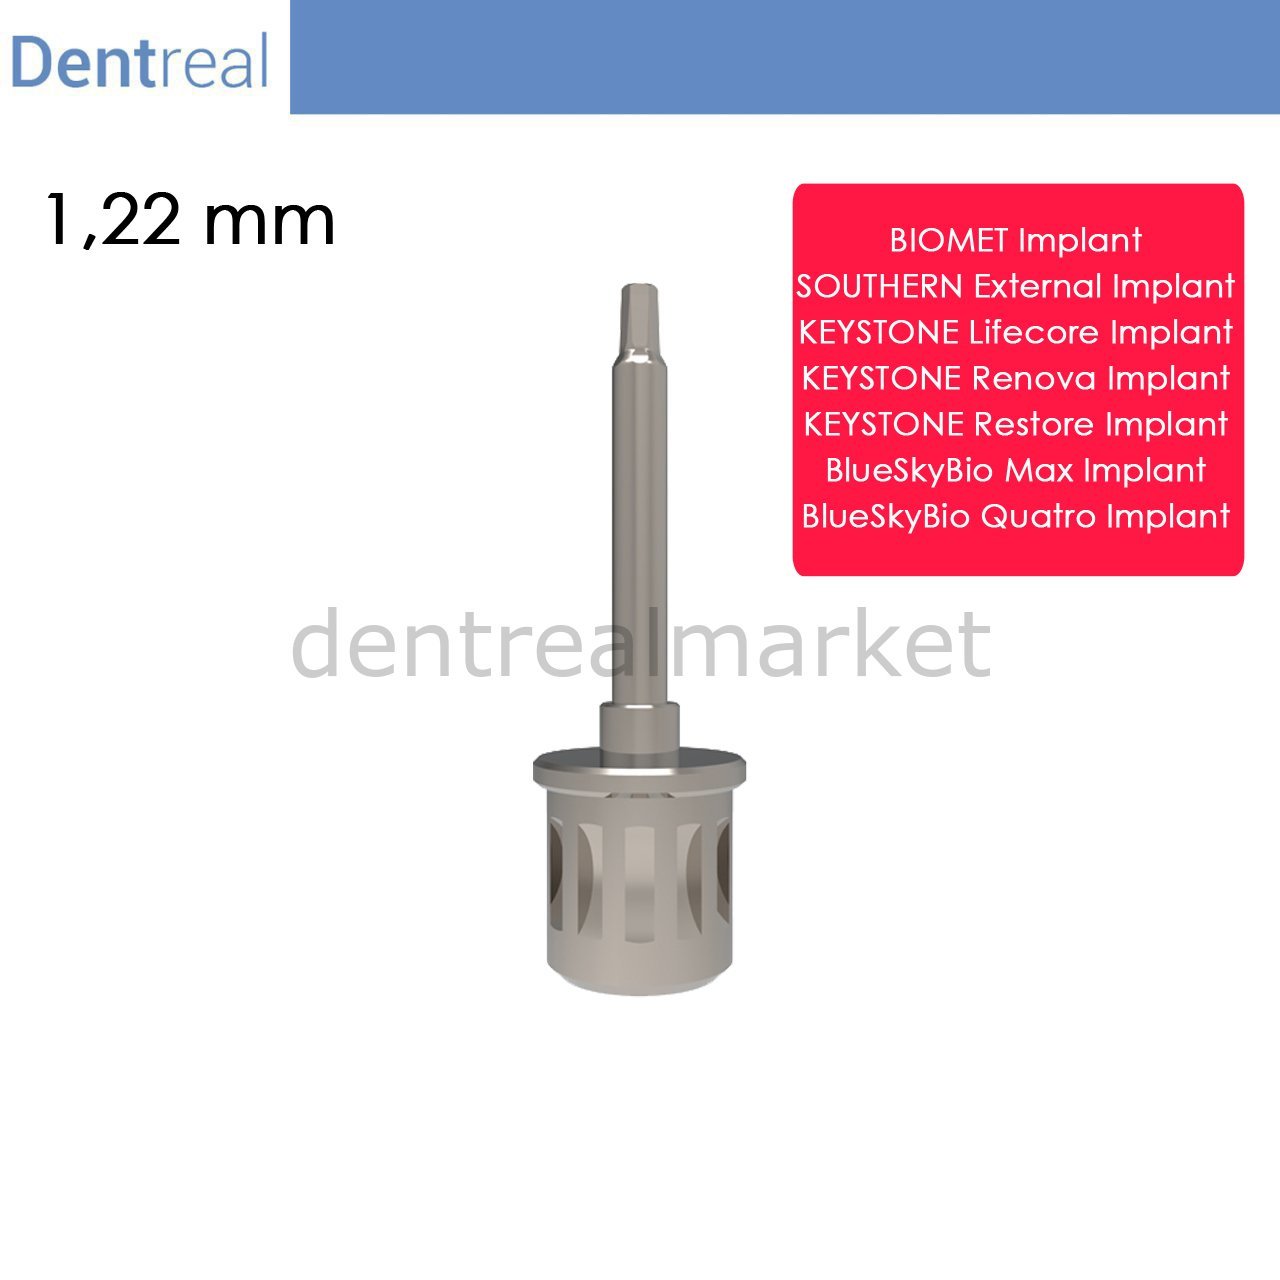 DentrealStore - Dentreal Screwdriver for BlueSkyBio Max Implant - 1,22 mm Hex Driver